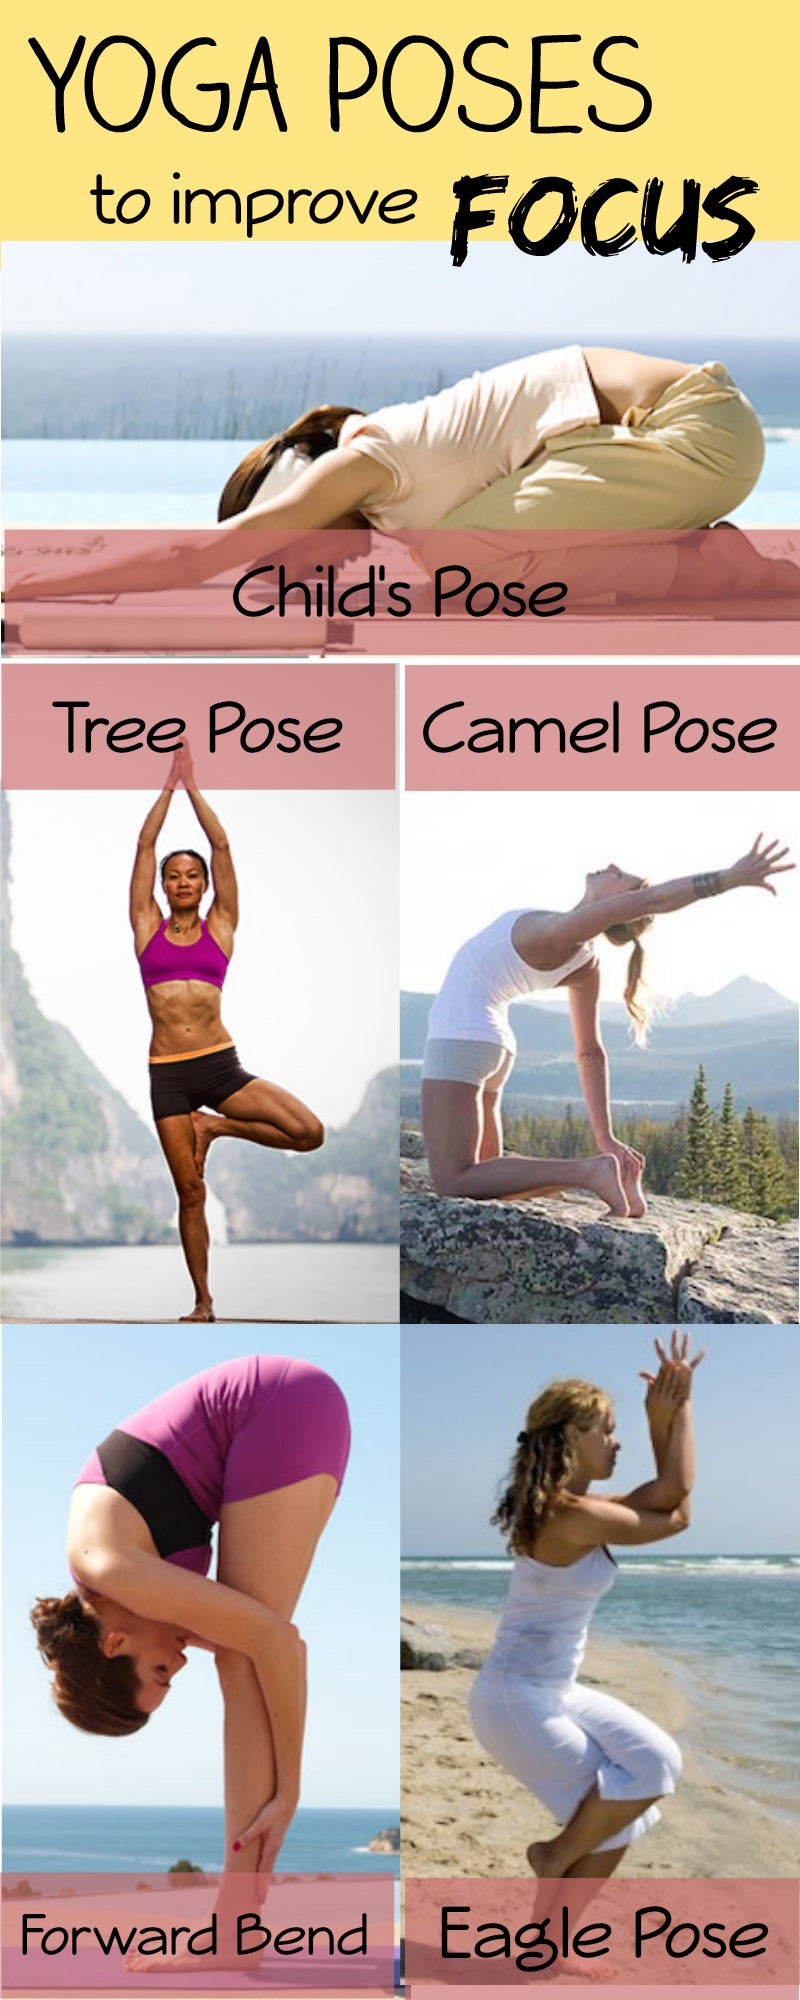 4 Ways to Balance in Yoga Poses - wikiHow Health